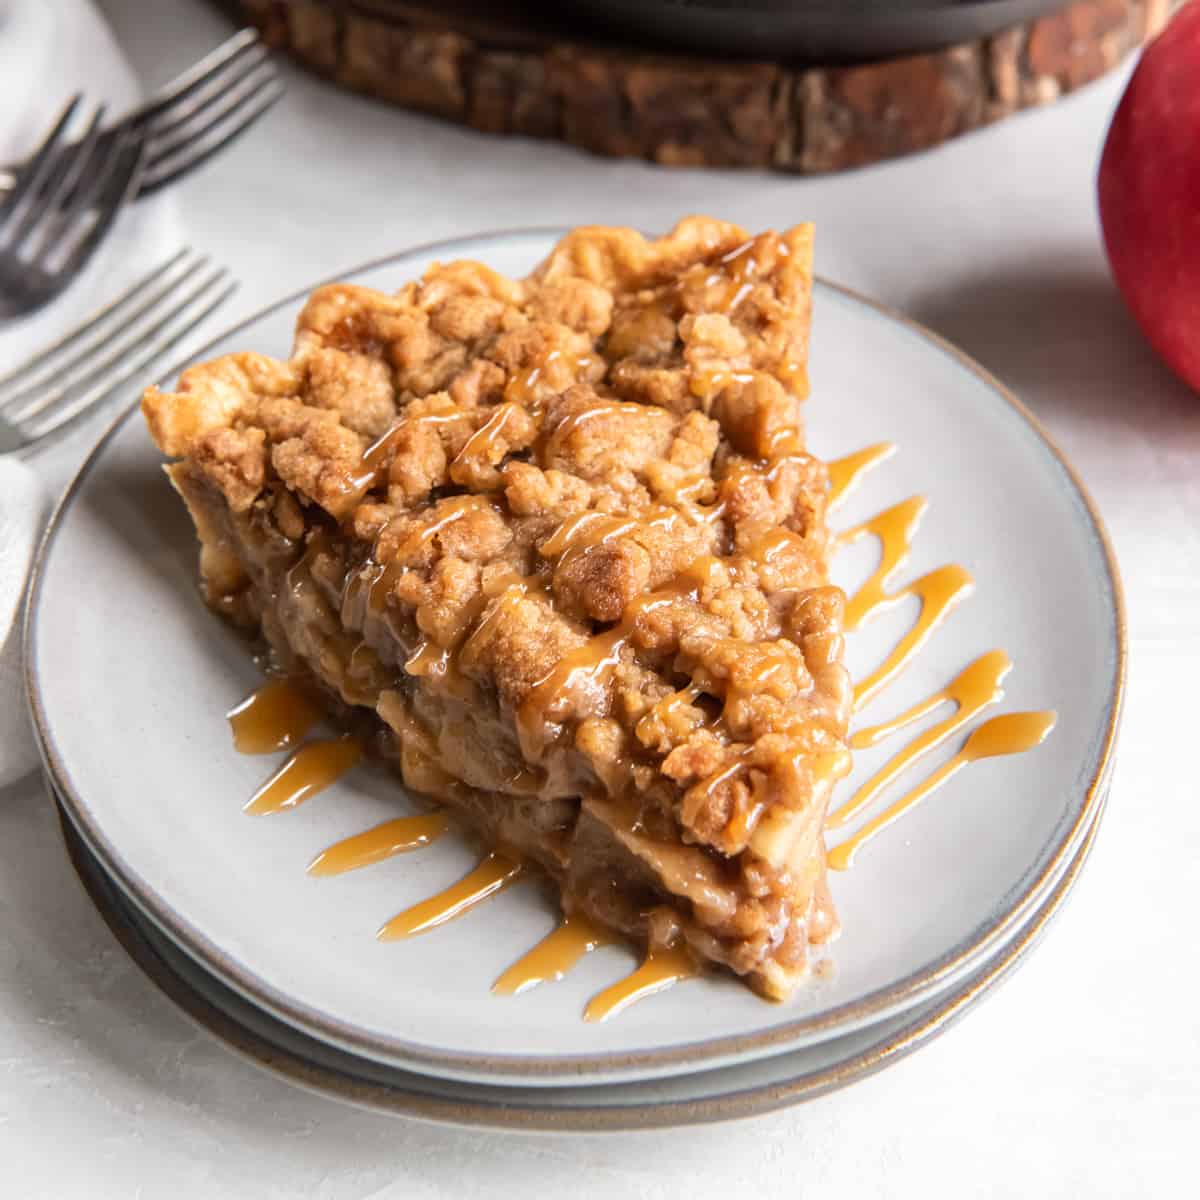 Homemade Apple Pie Recipe - The Cookie Rookie®